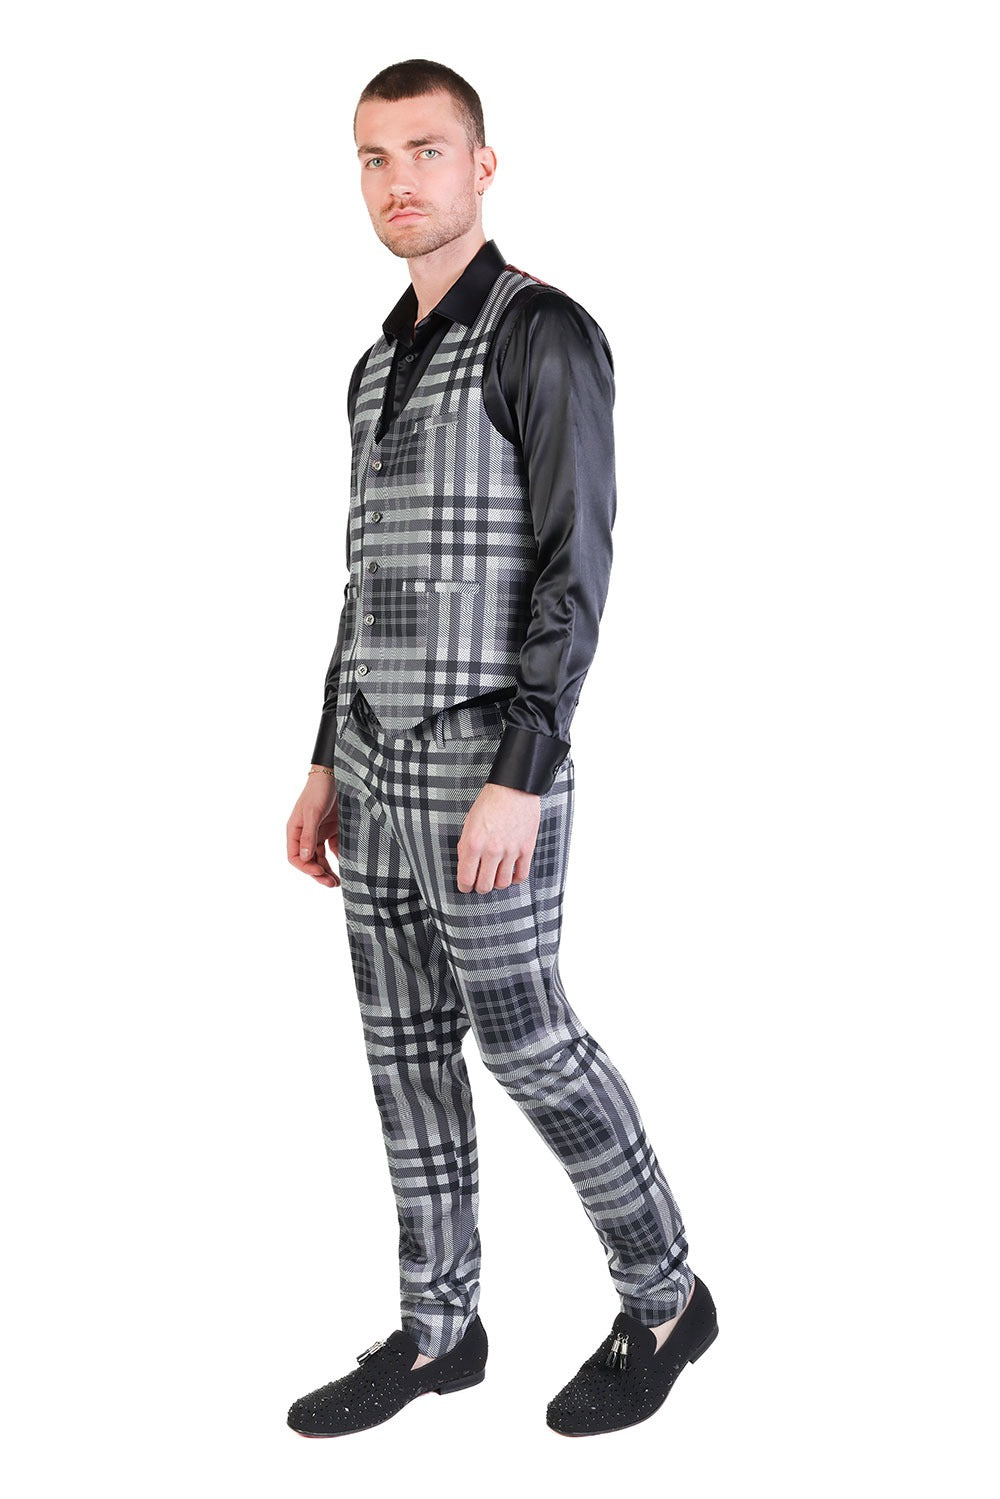 Barabas Men's Luxury Plaid Checkered Dress Slim Fit  Vests VP201 Black